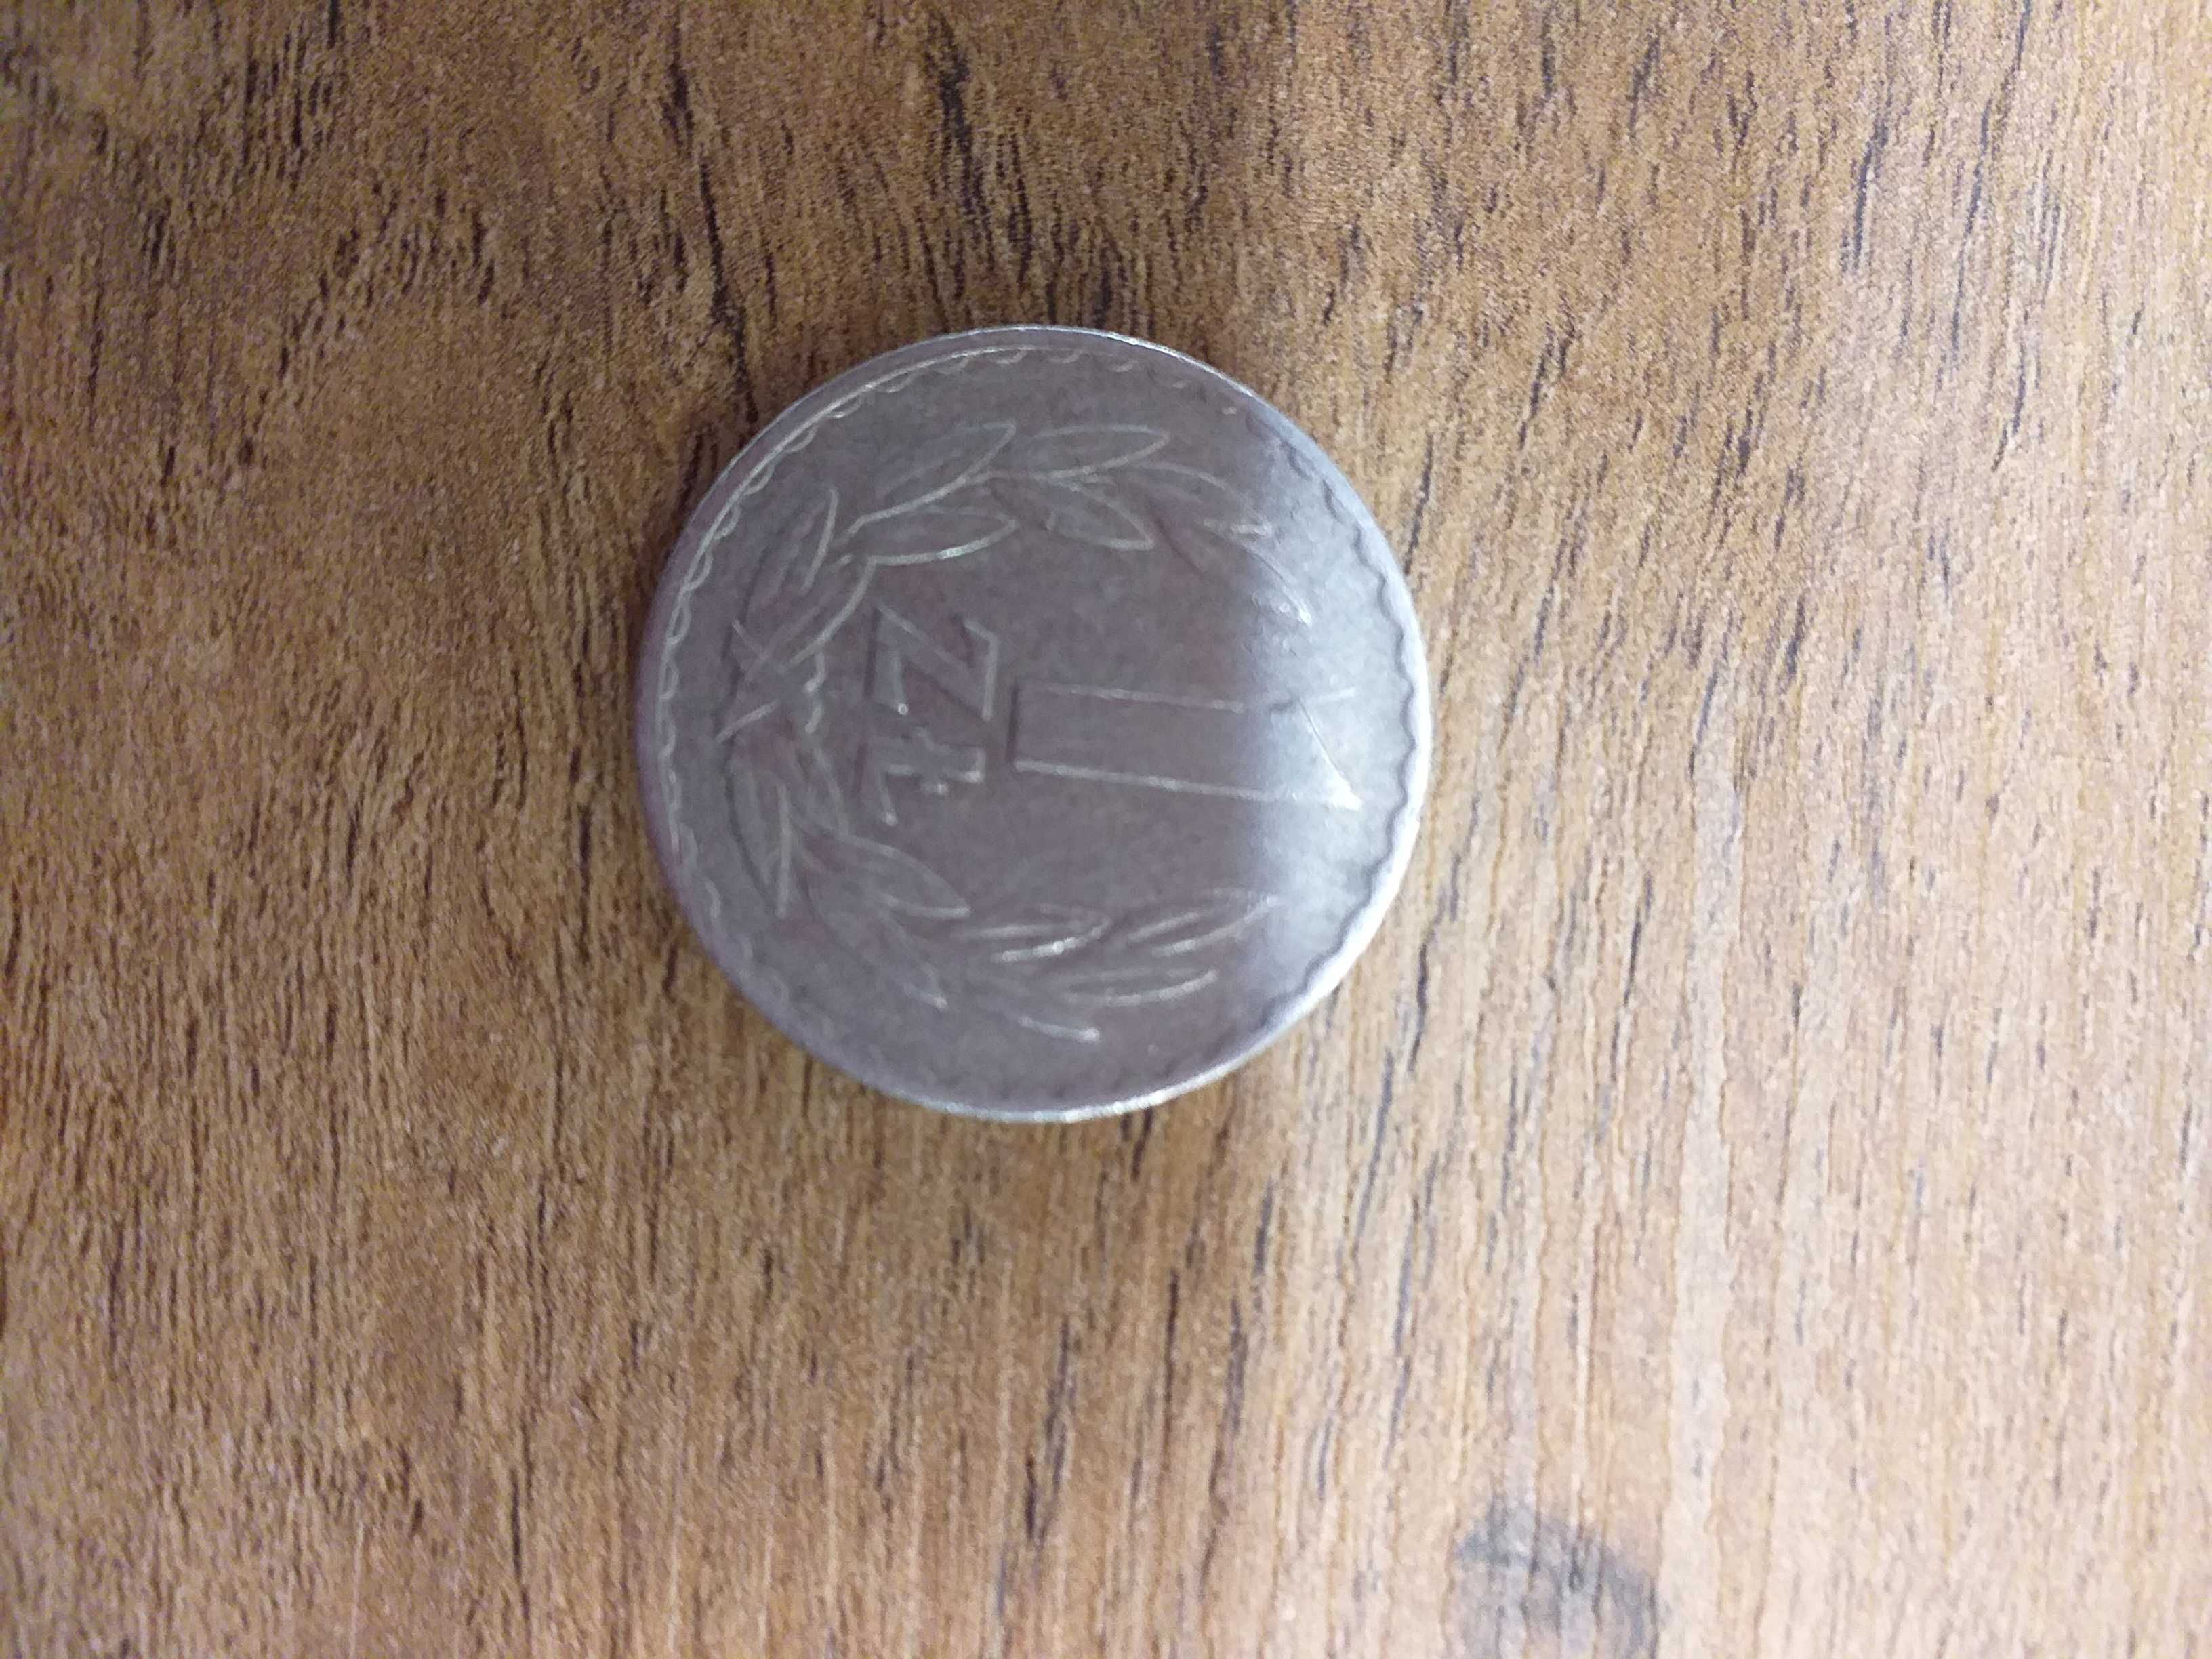 Moneta 1 zl z 1973 roku